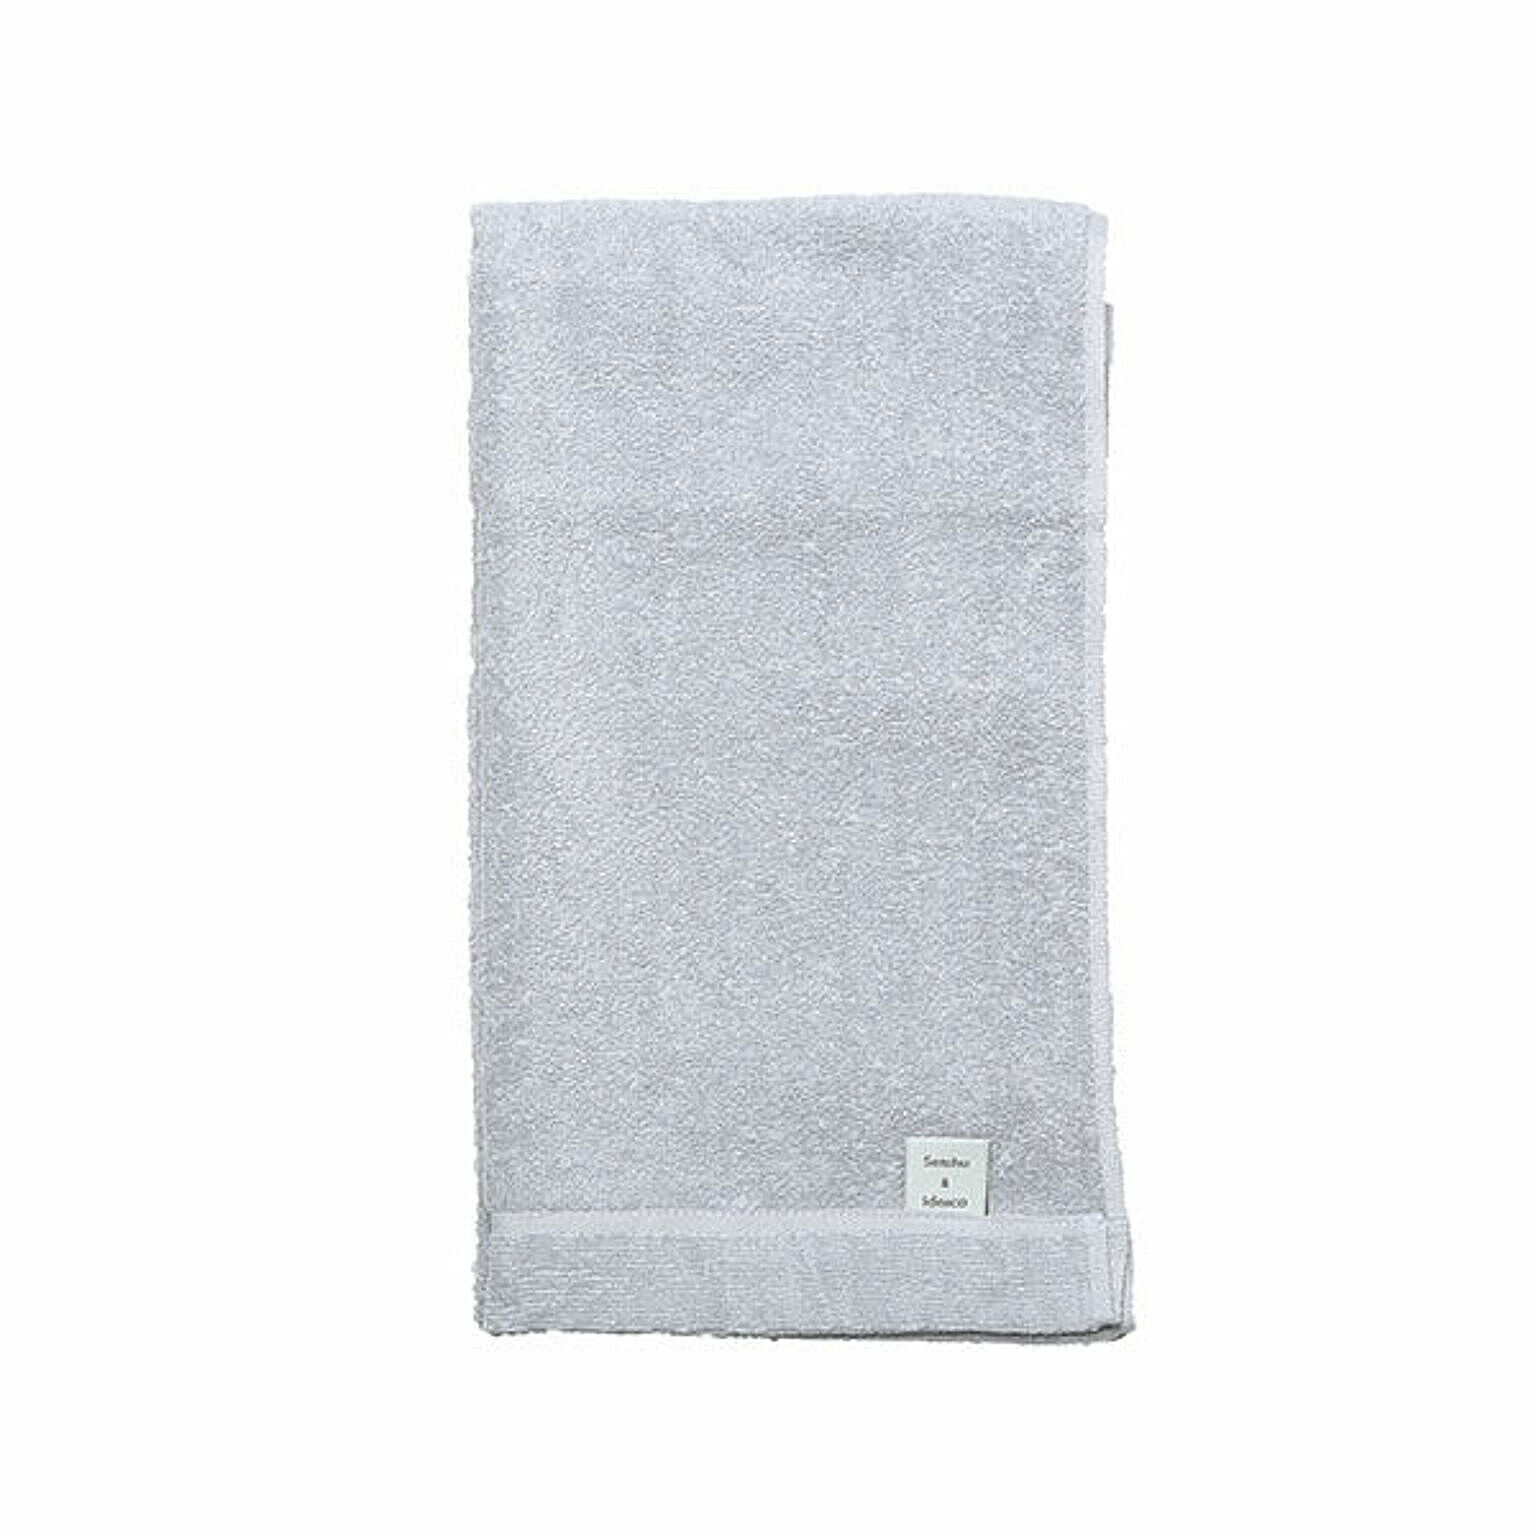 organic cotton towel / face イデアコ オーガニック コットン タオル / フェイス 泉州タオル/日本製